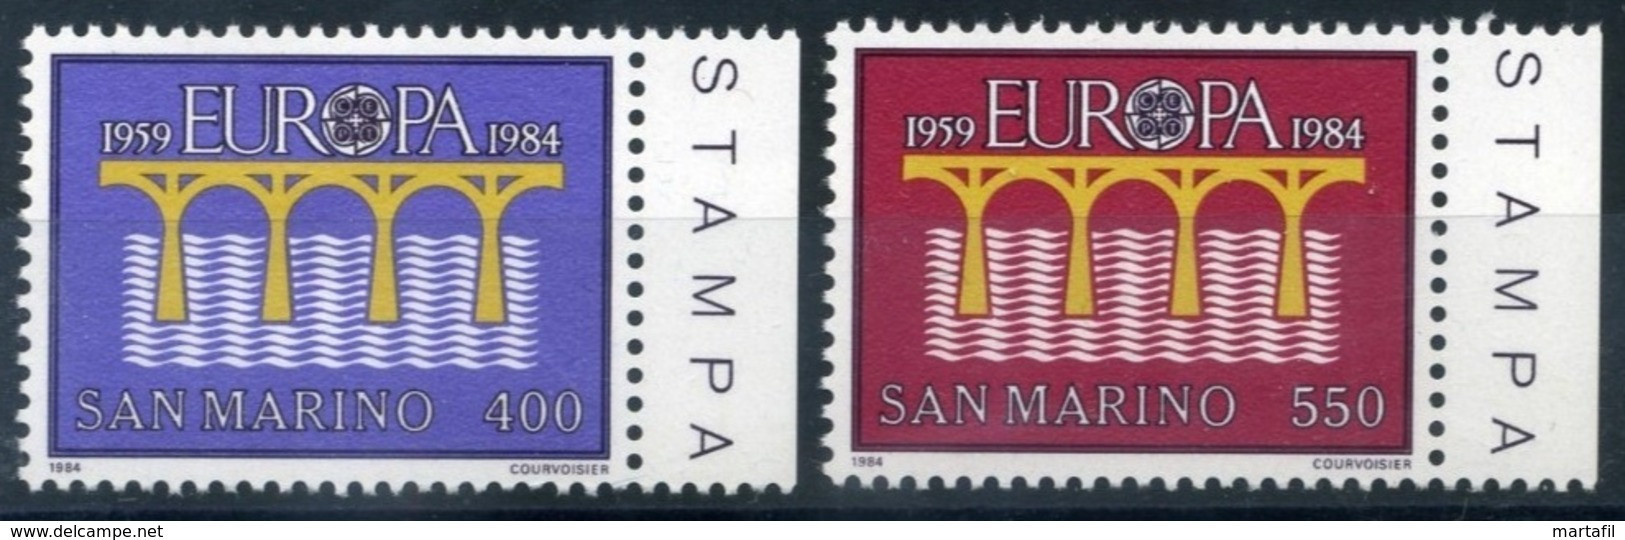 1984 SAN MARINO SET MNH ** Europa - Unused Stamps